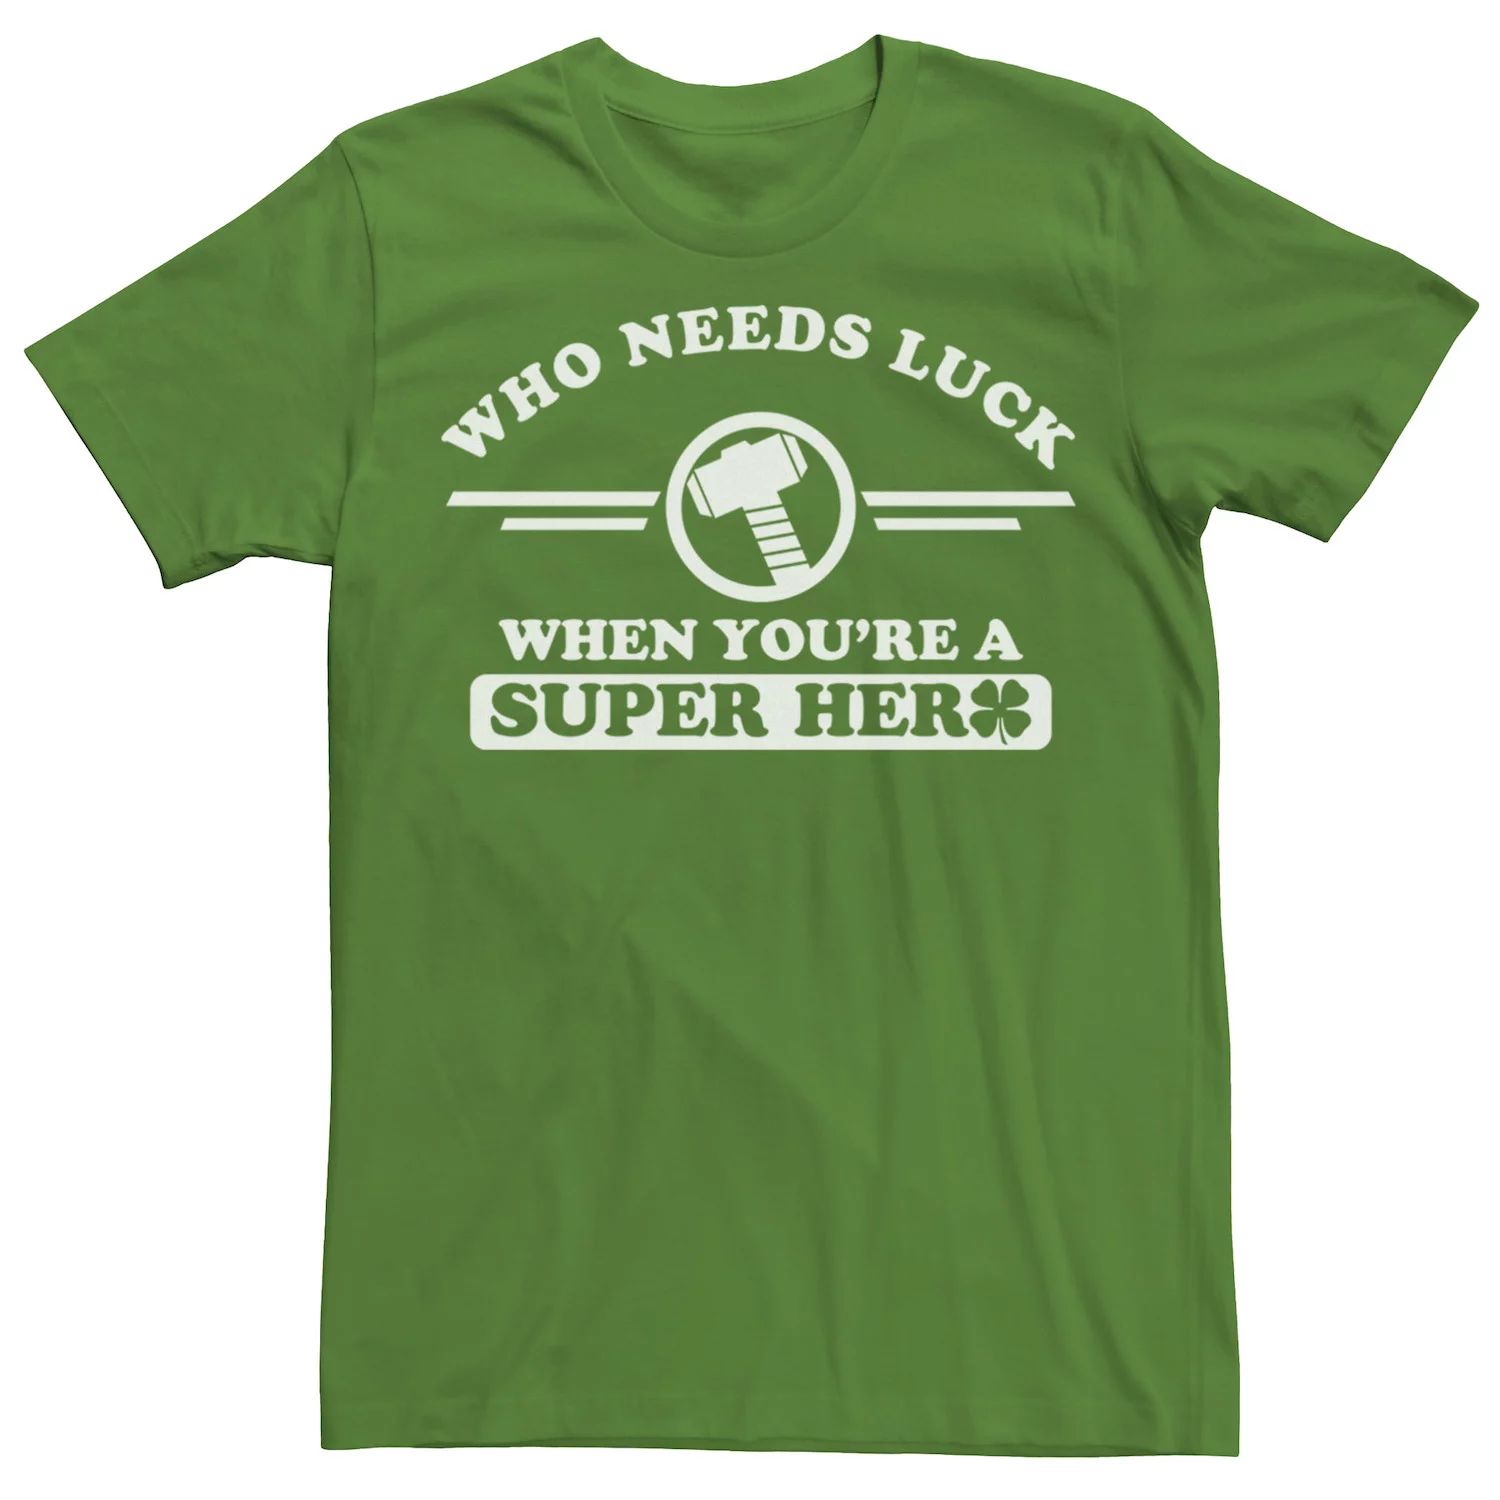 Мужская футболка Marvel, кому нужна удача, если ты супергерой Licensed Character